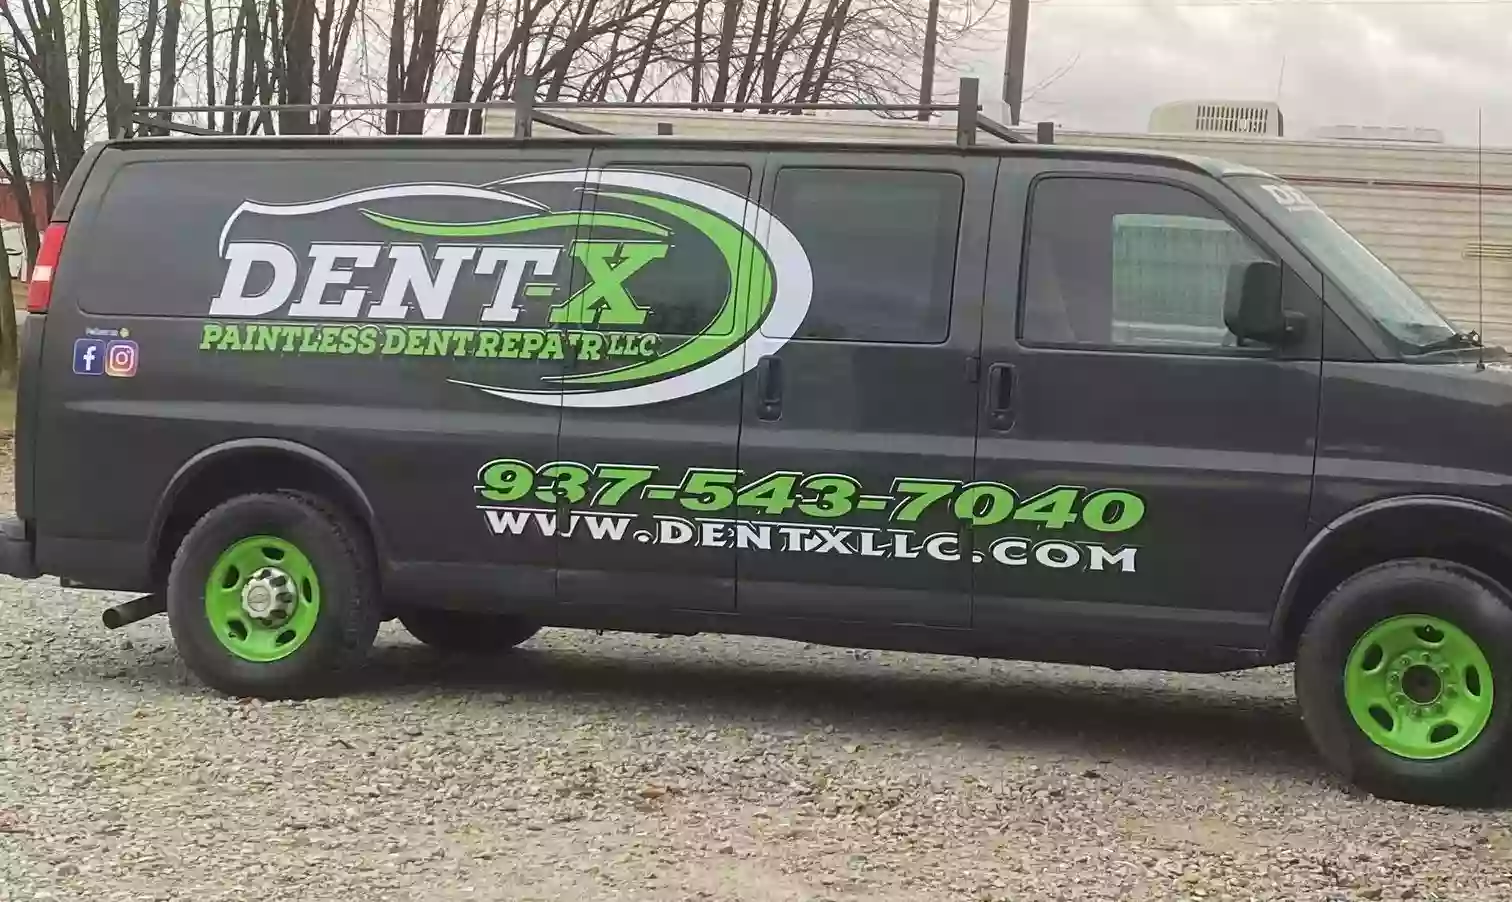 Dent-X Paintless Dent Repair LLC